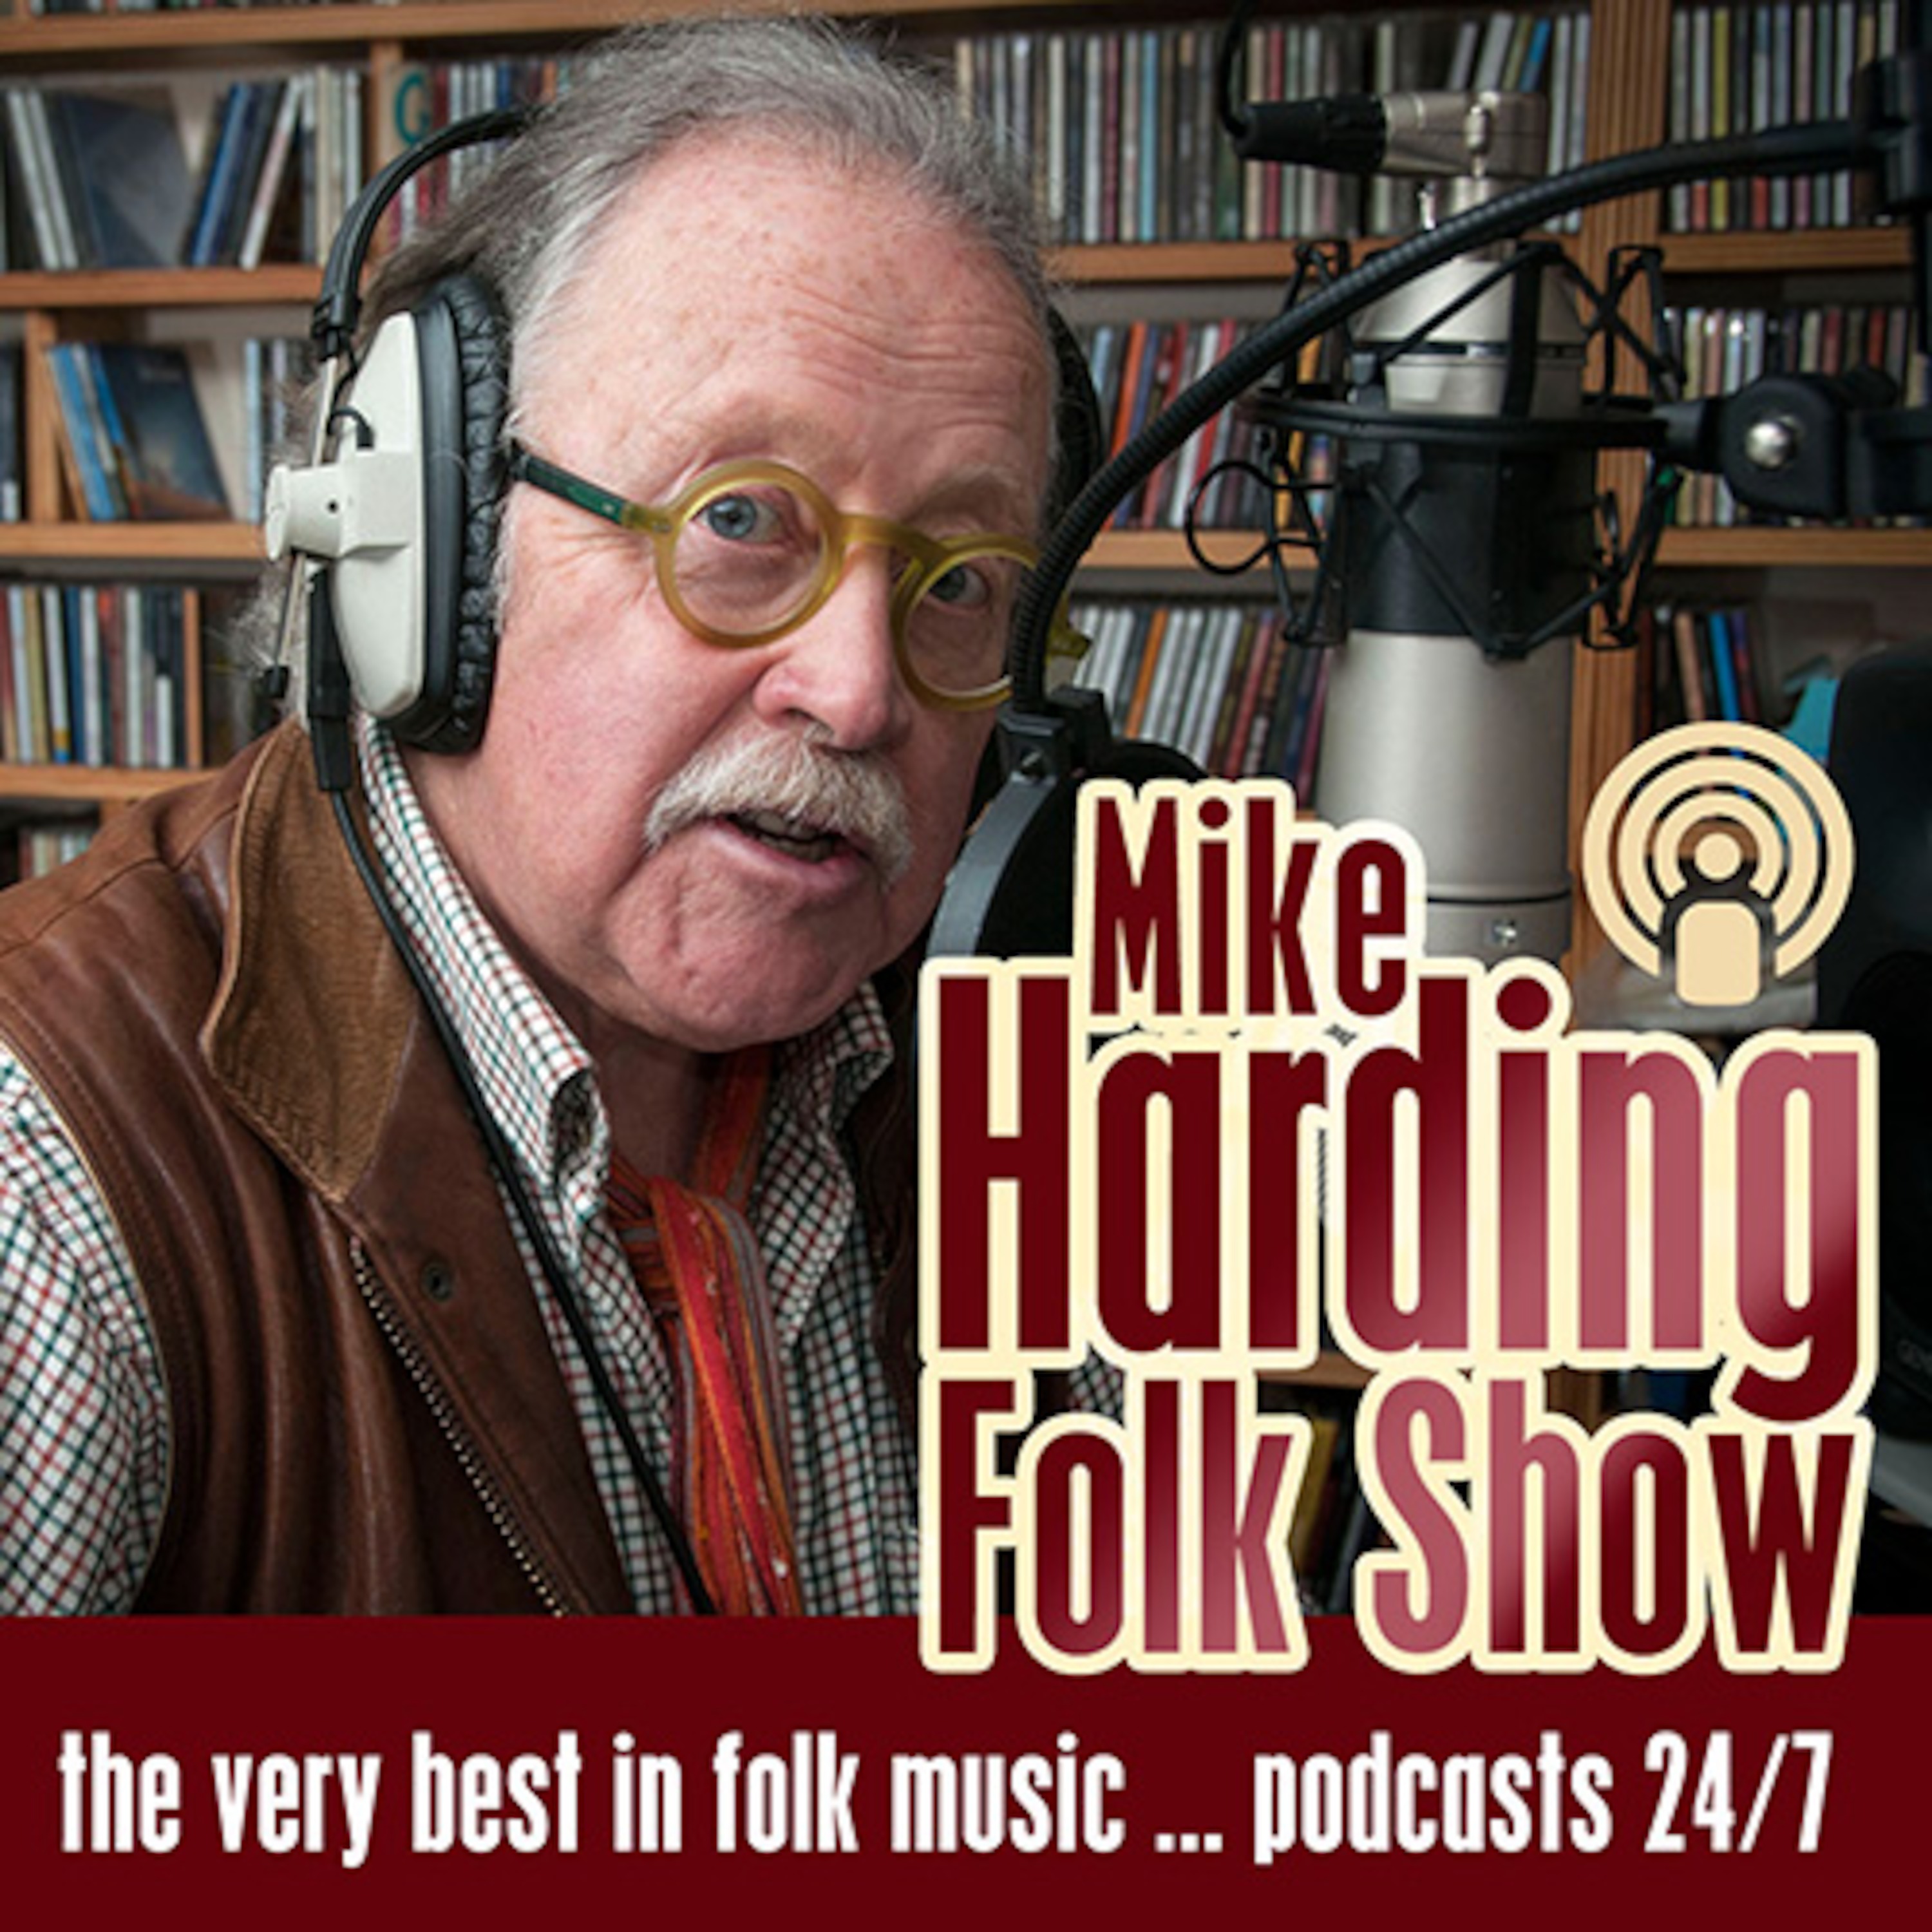 Mike Harding Folk Show 106